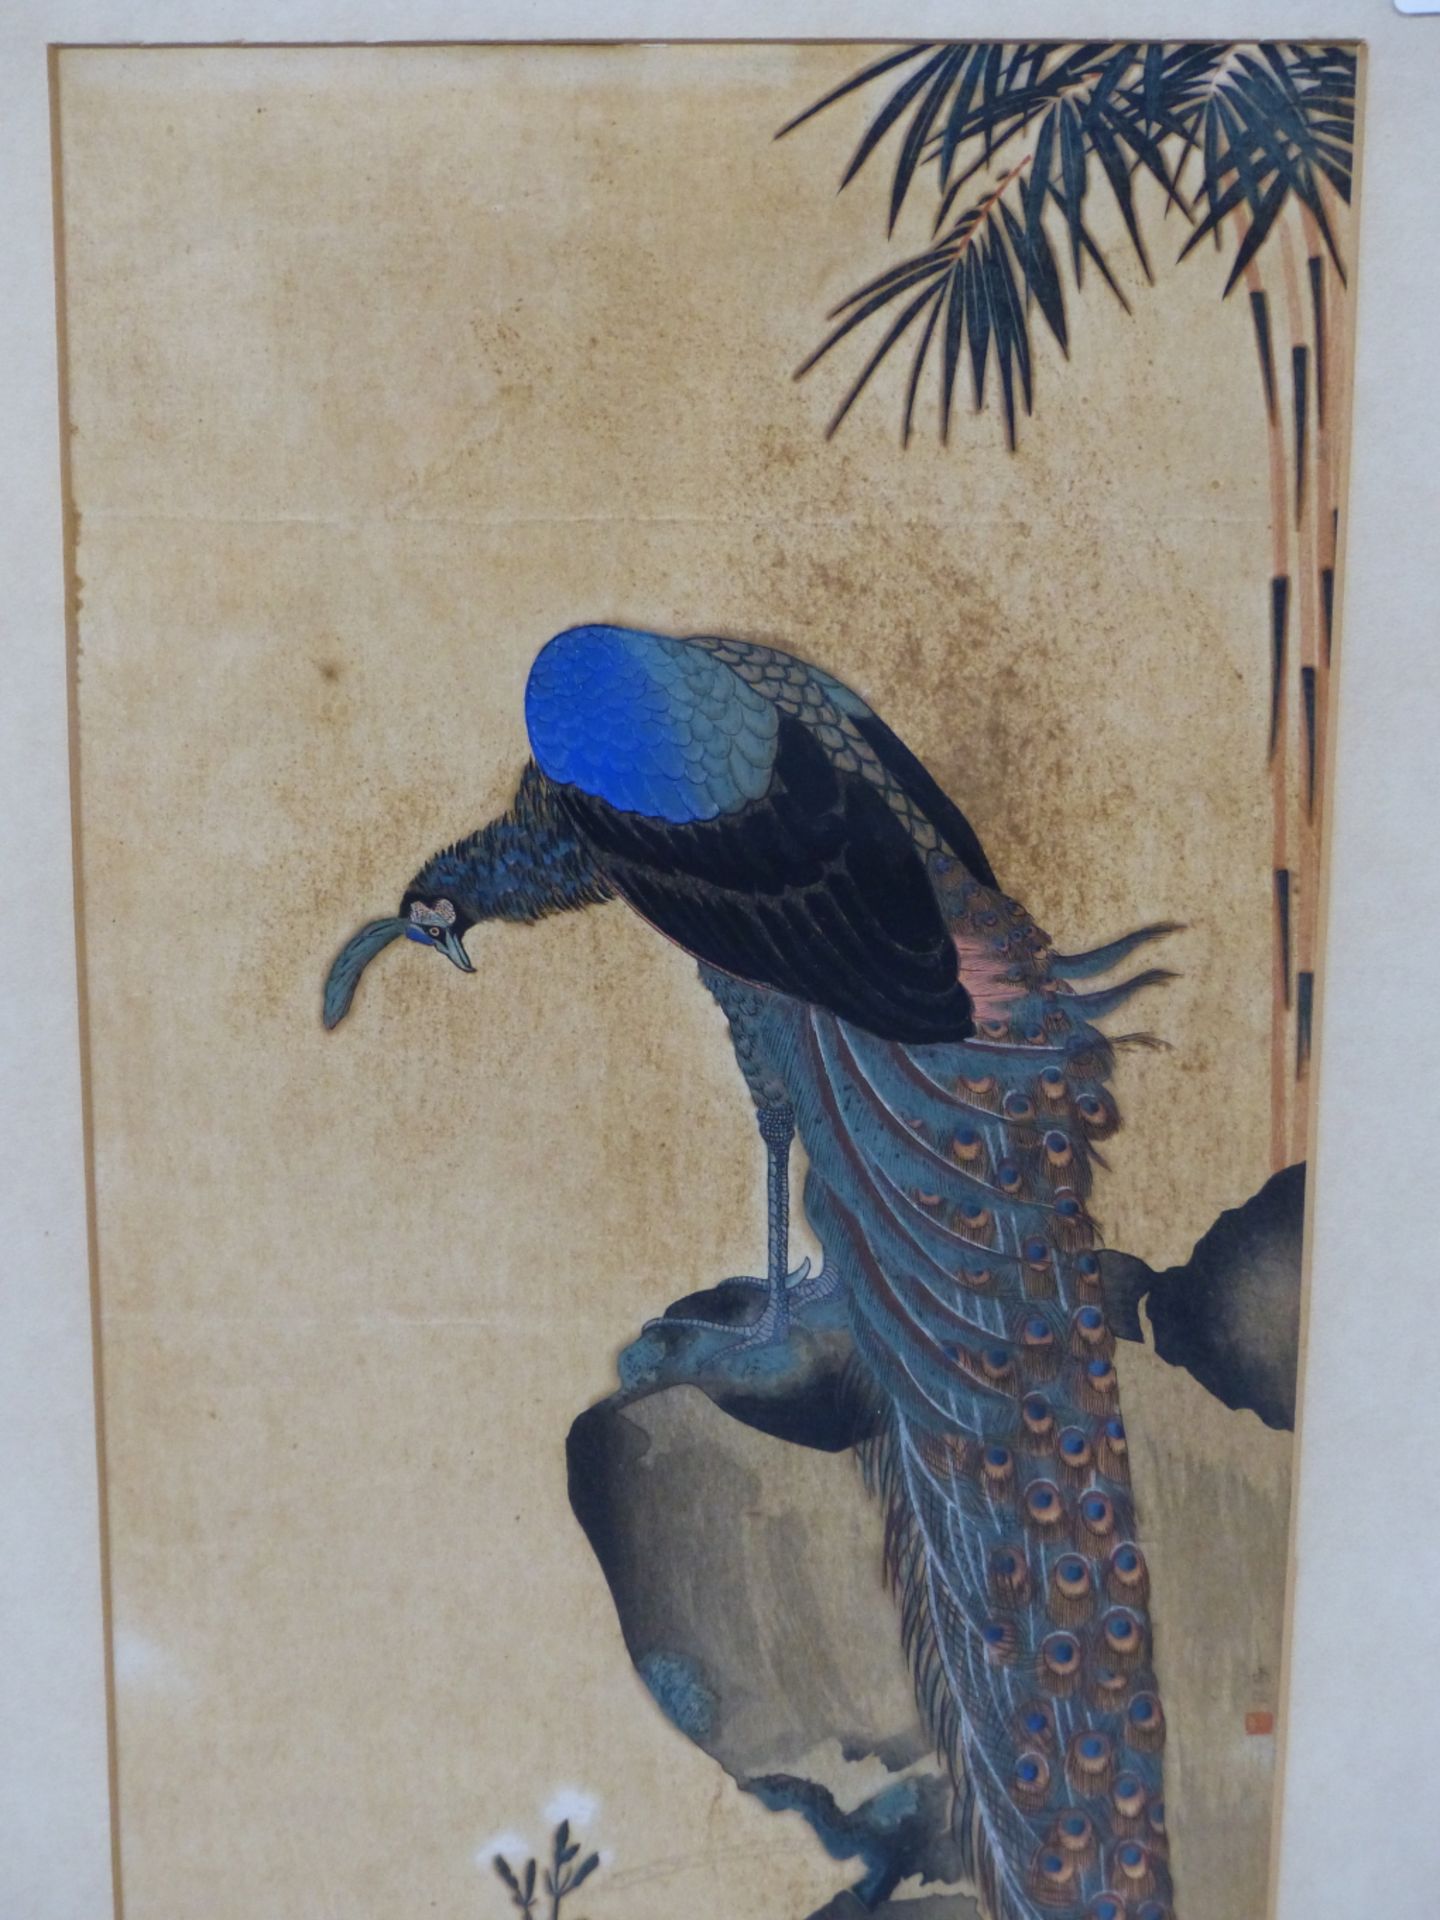 YAMAGUCHI SOKEN A.K.A TAKEJIRO, KYOTO 1759-1818, WOOD BLOCK PRINT OF A PEACOCK ON A ROCK, WITH